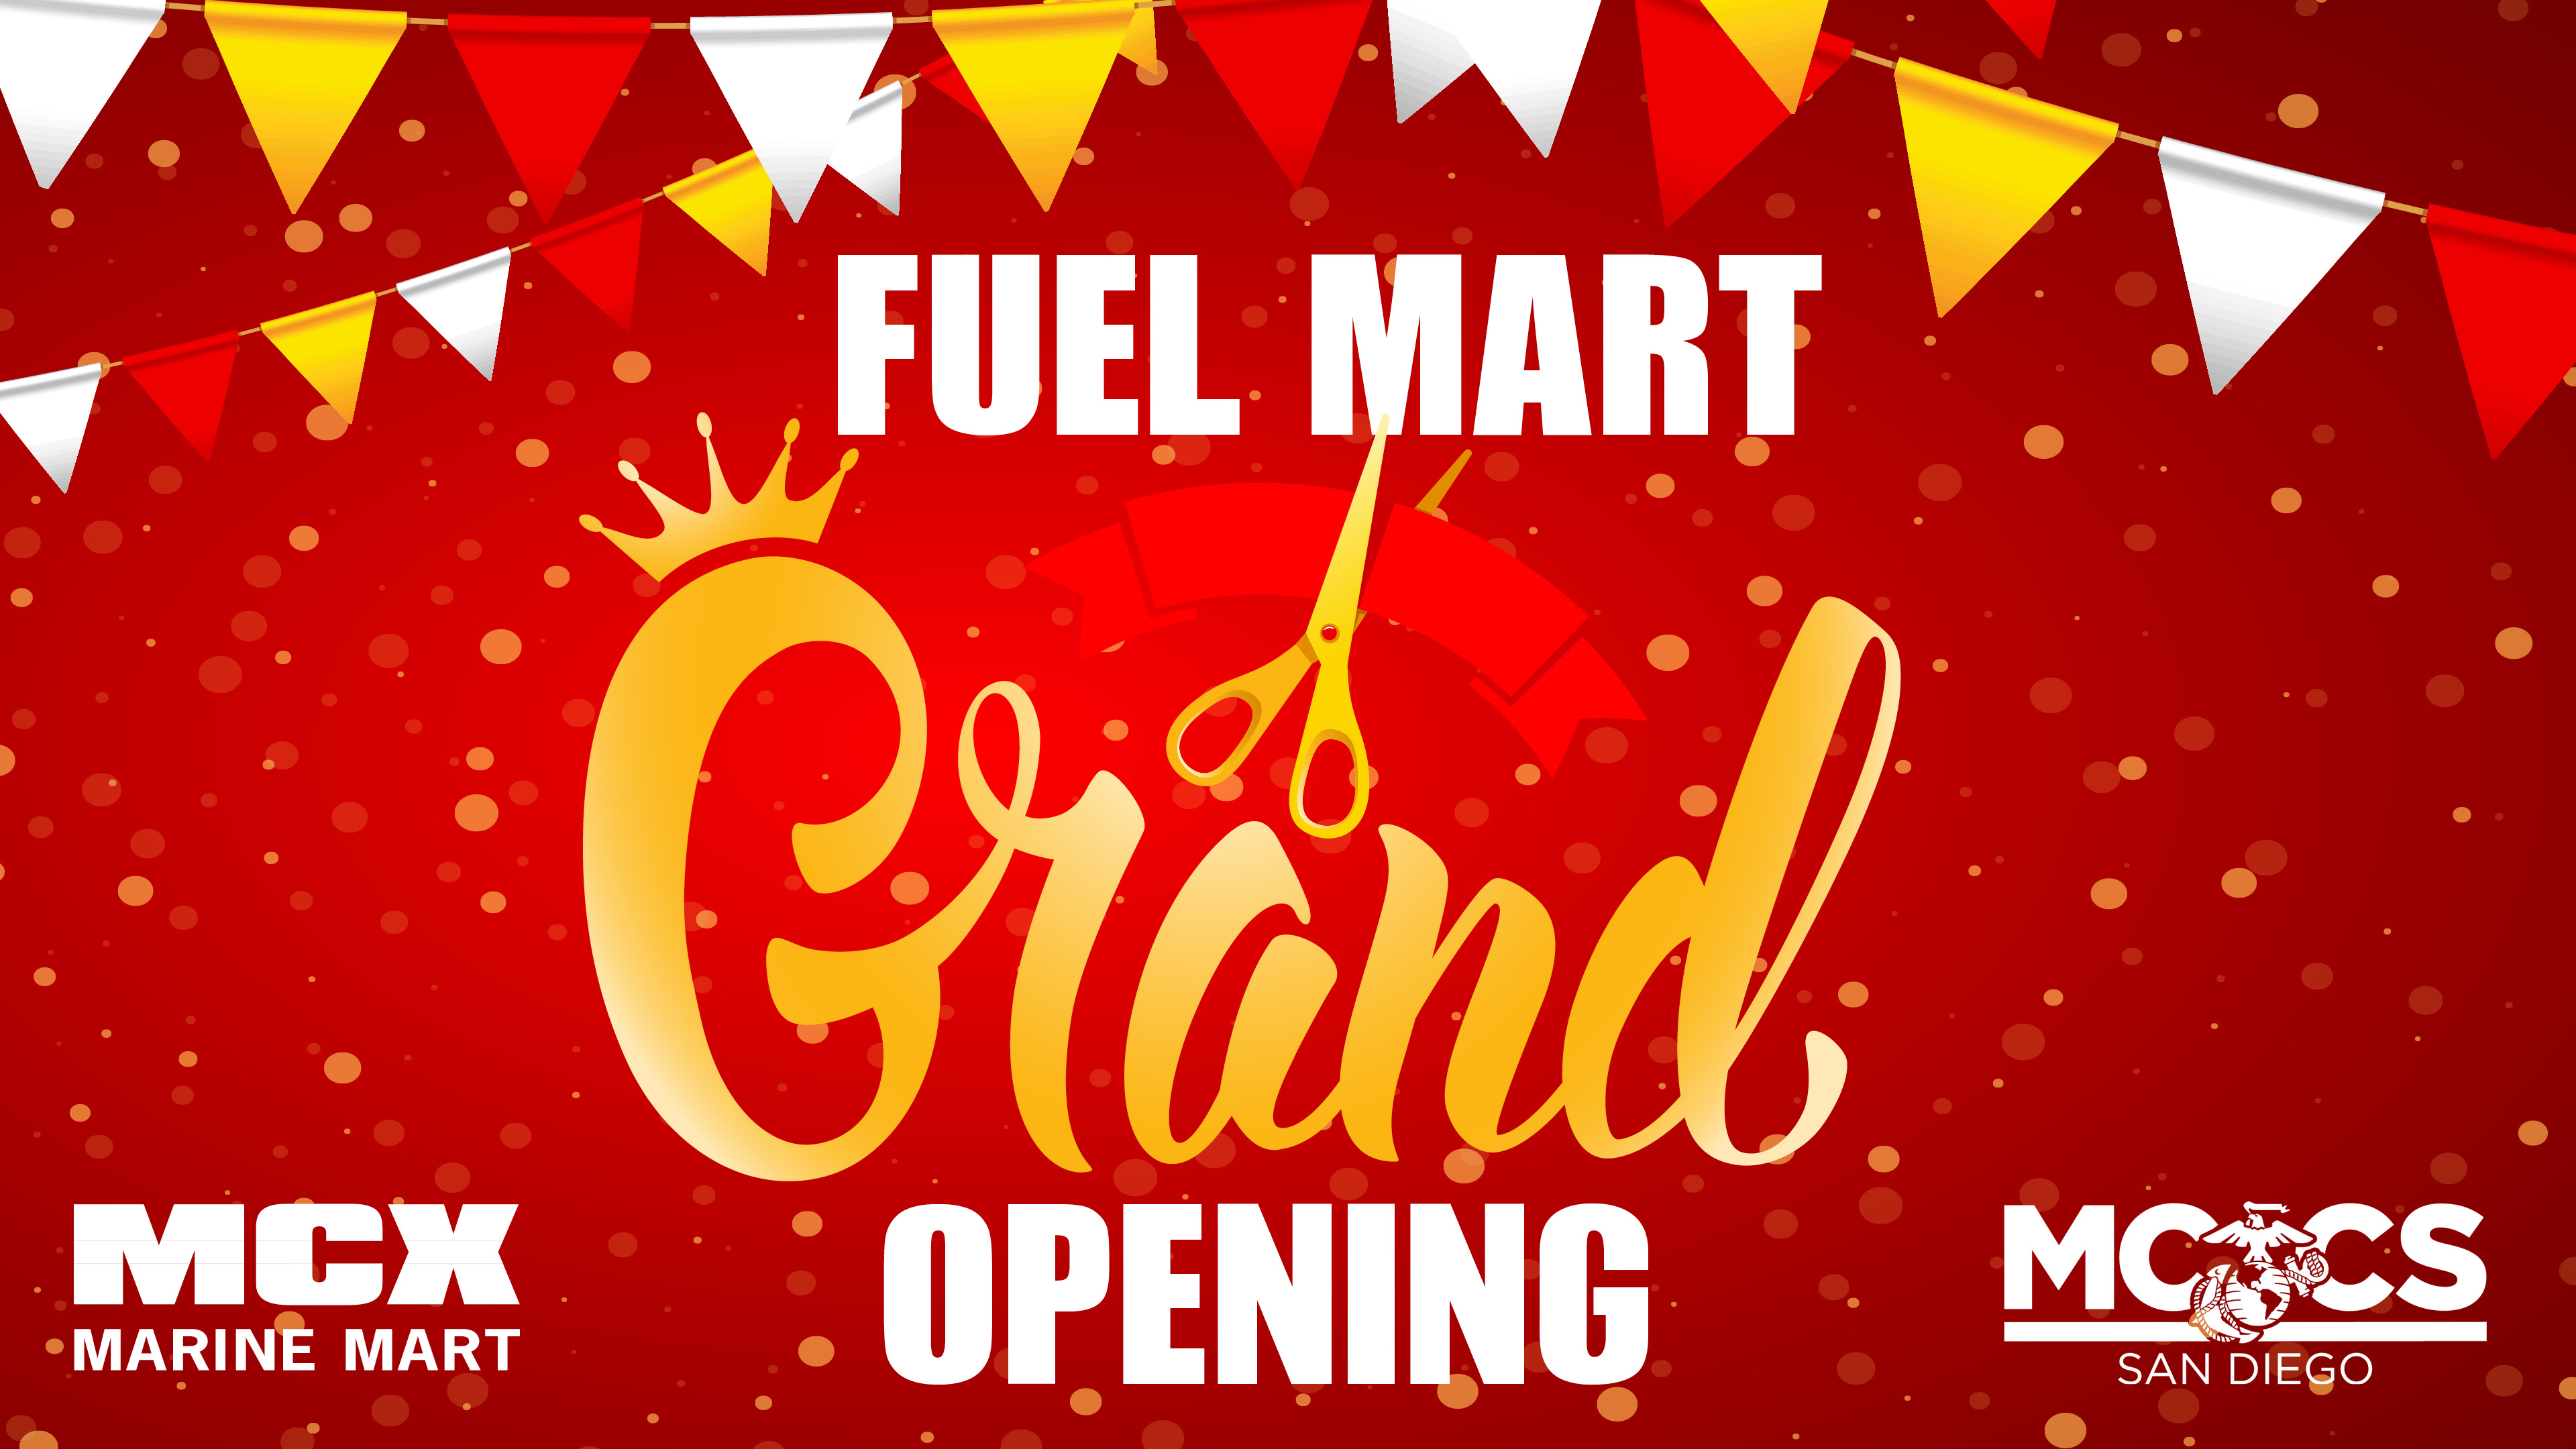 MCCS San Diego Fuel Mart Grand Opening event calendar thumbnail 1920x1080 (1).jpg